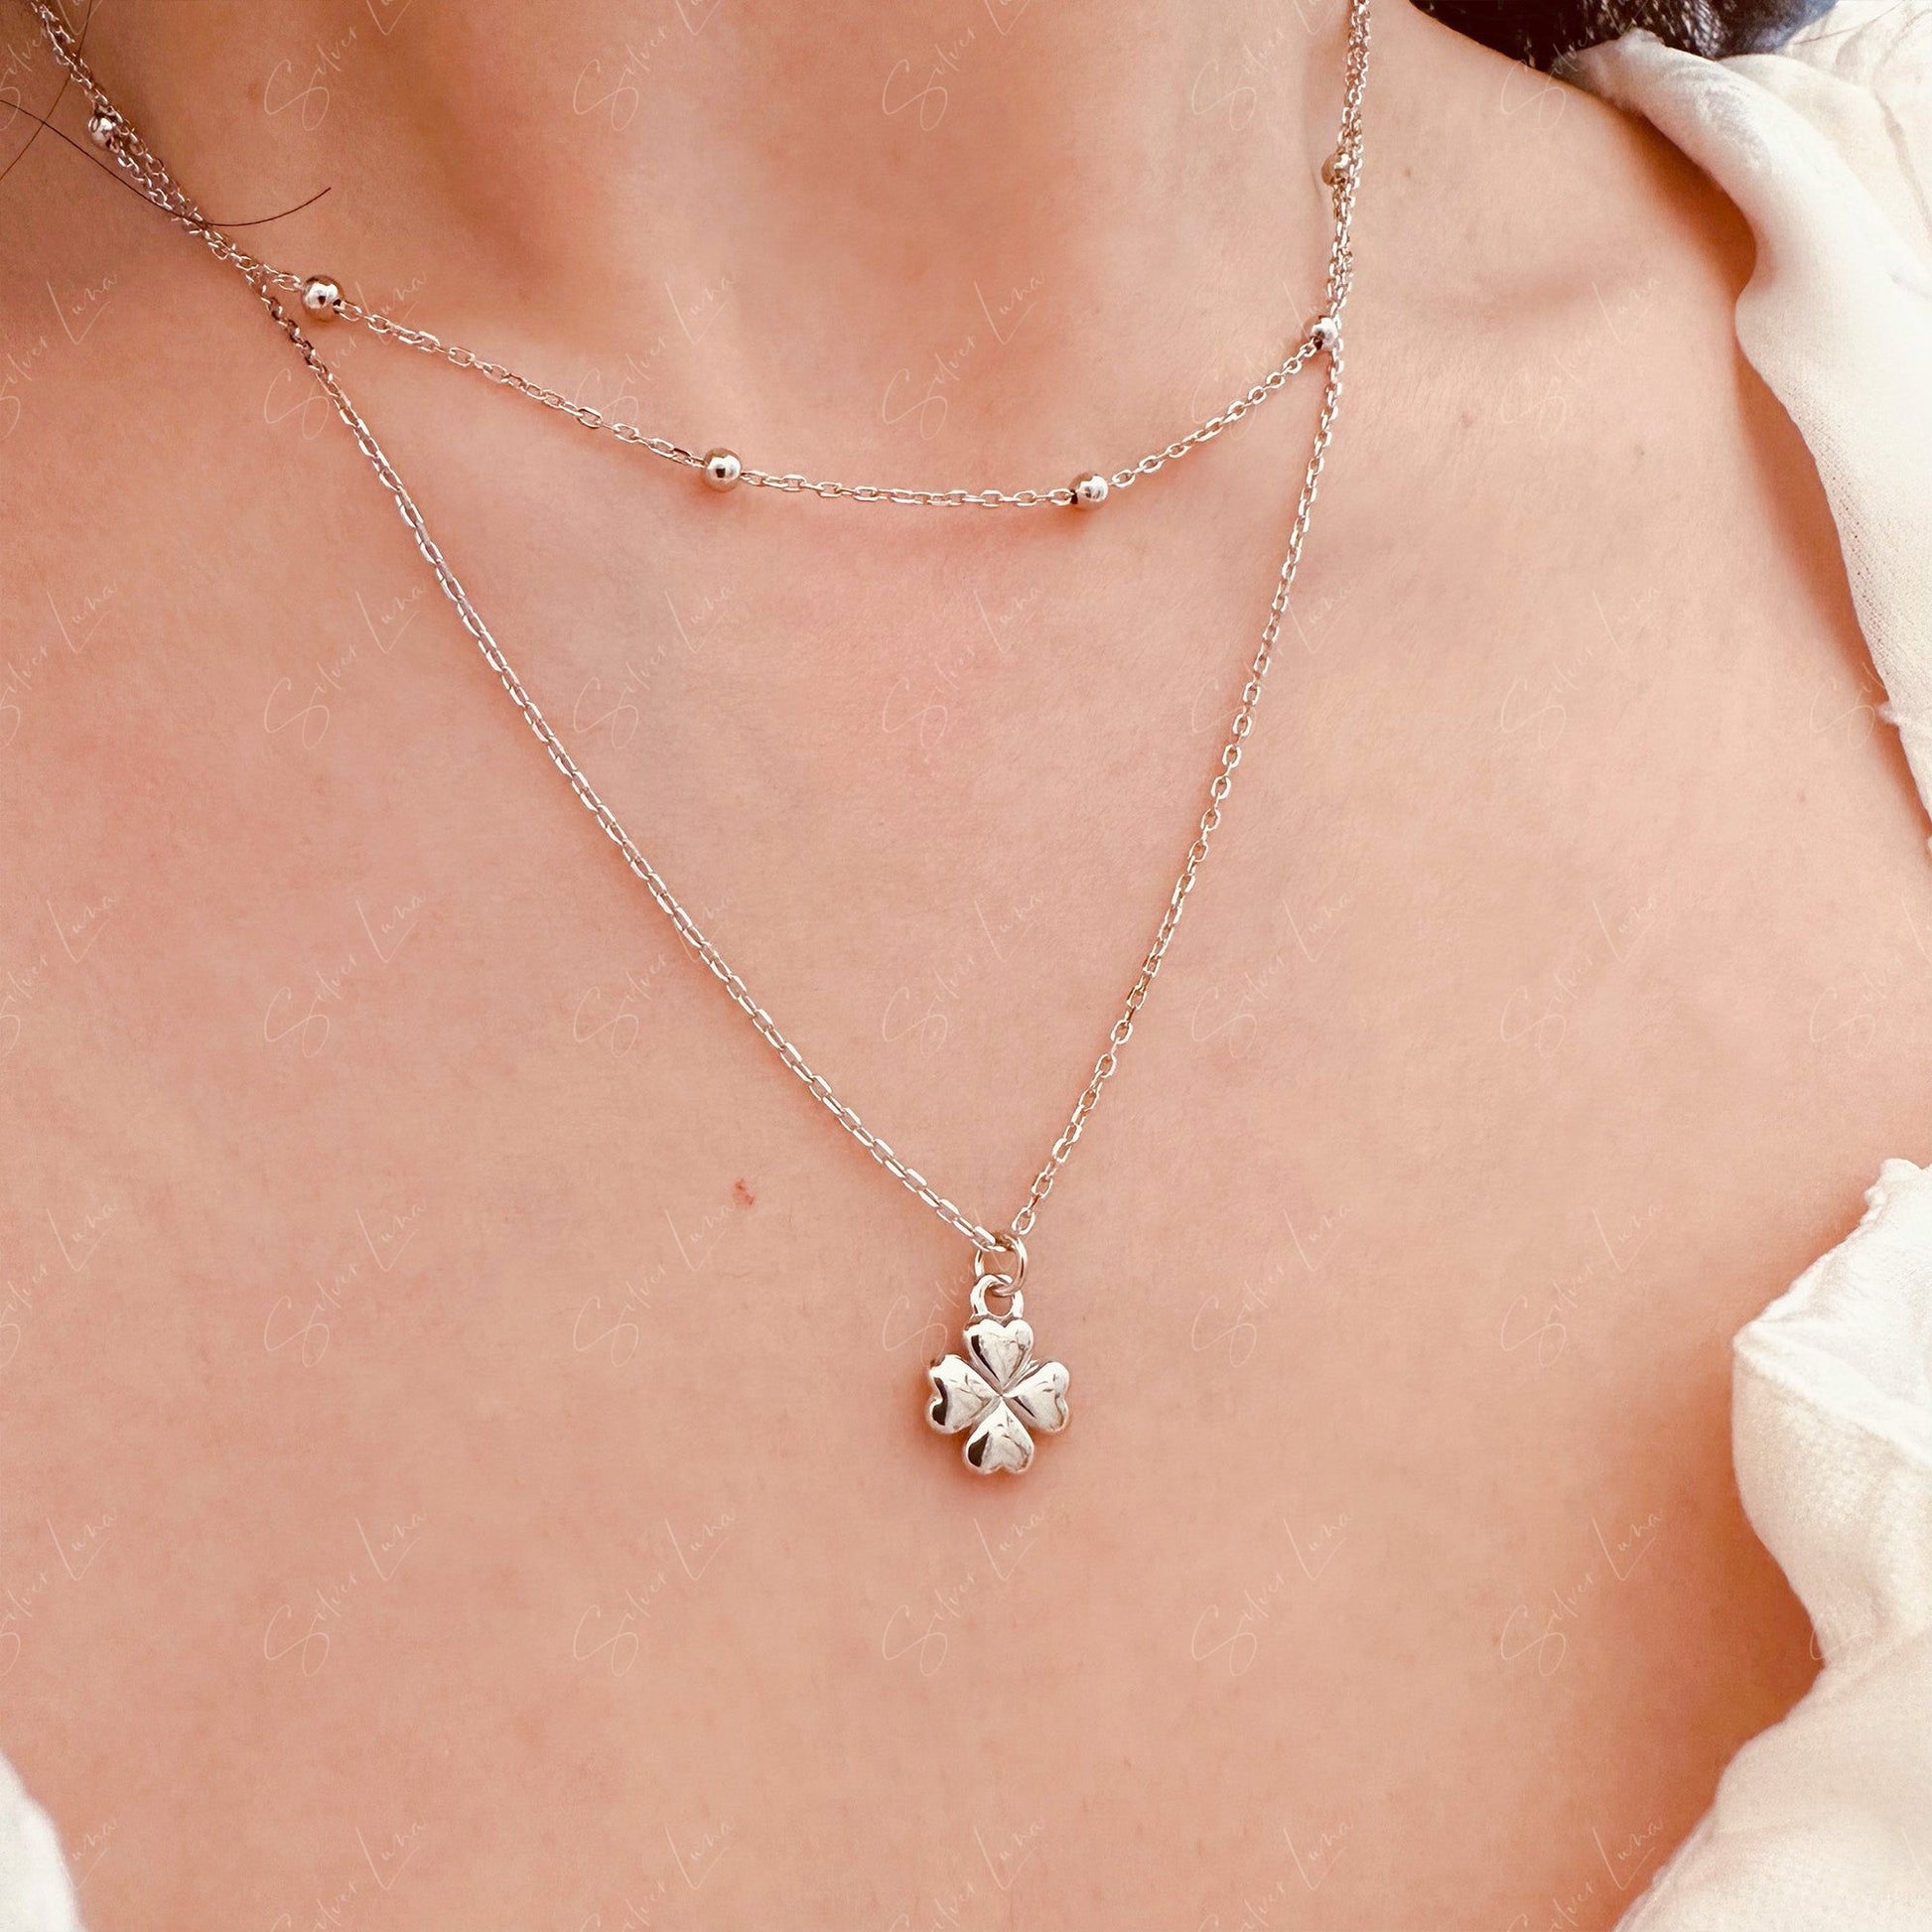 four leaf clover pendant necklace